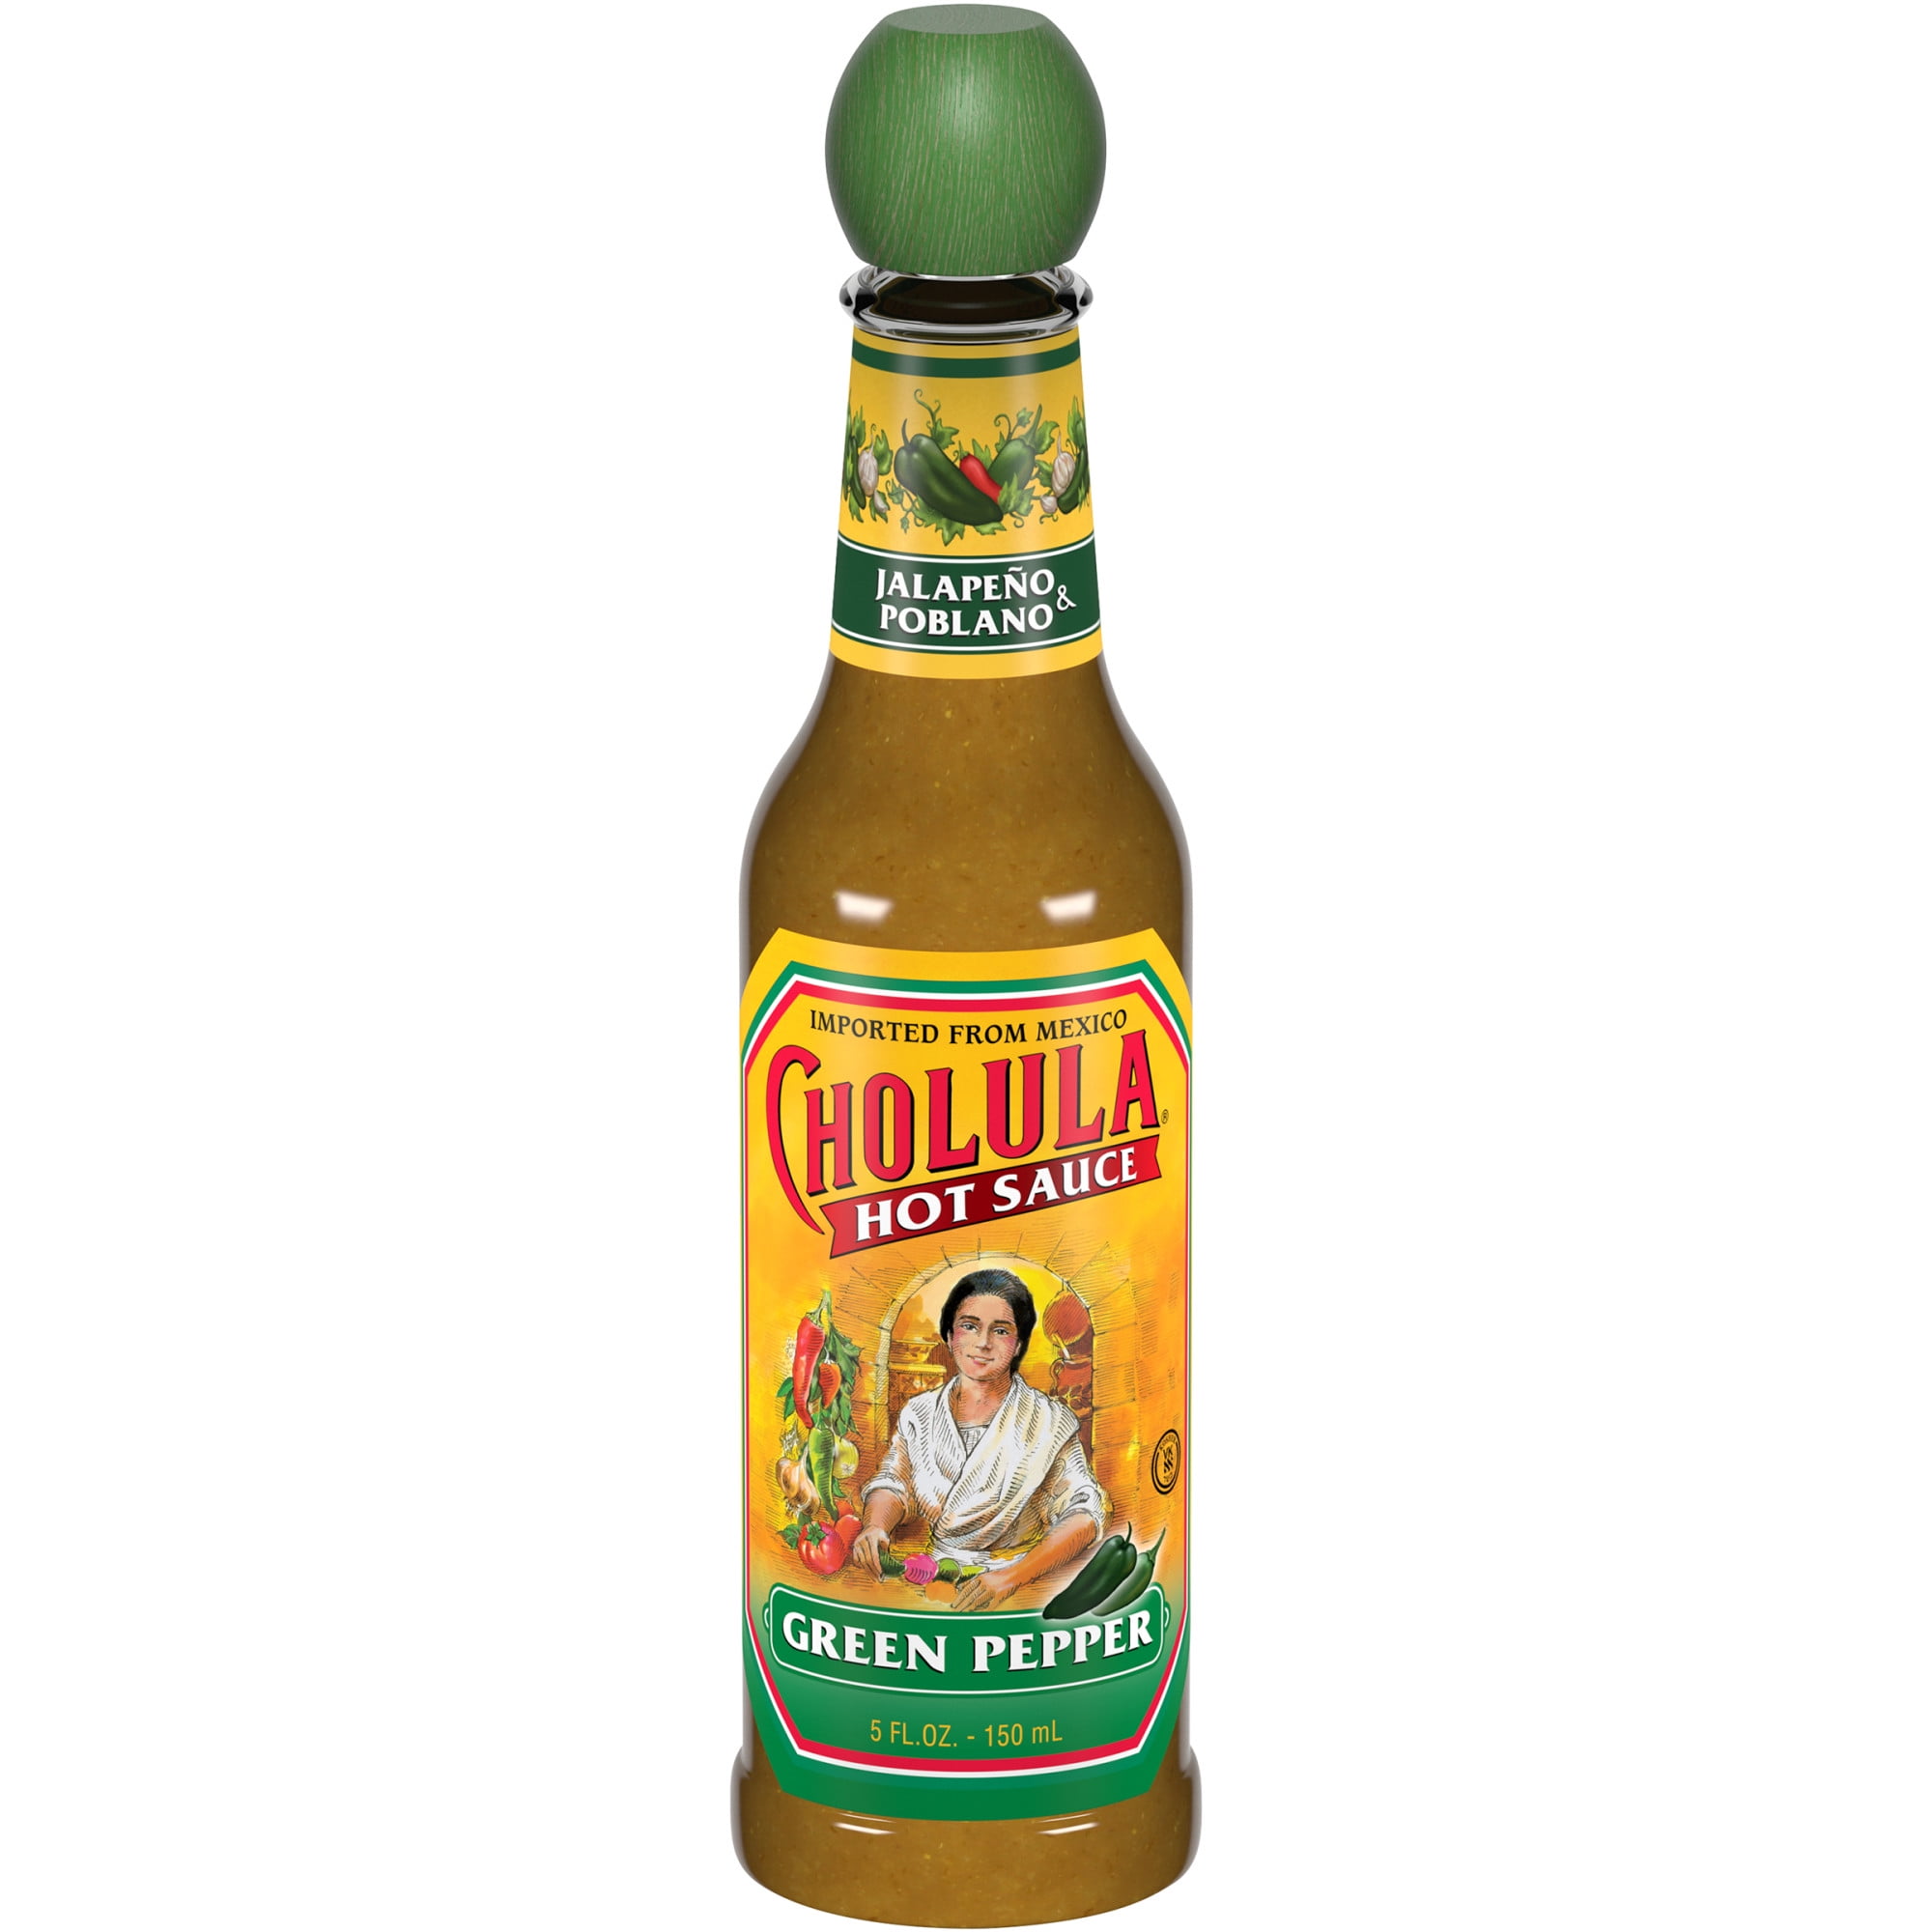 Cholula Green Pepper Hot Sauce, 5 fl oz